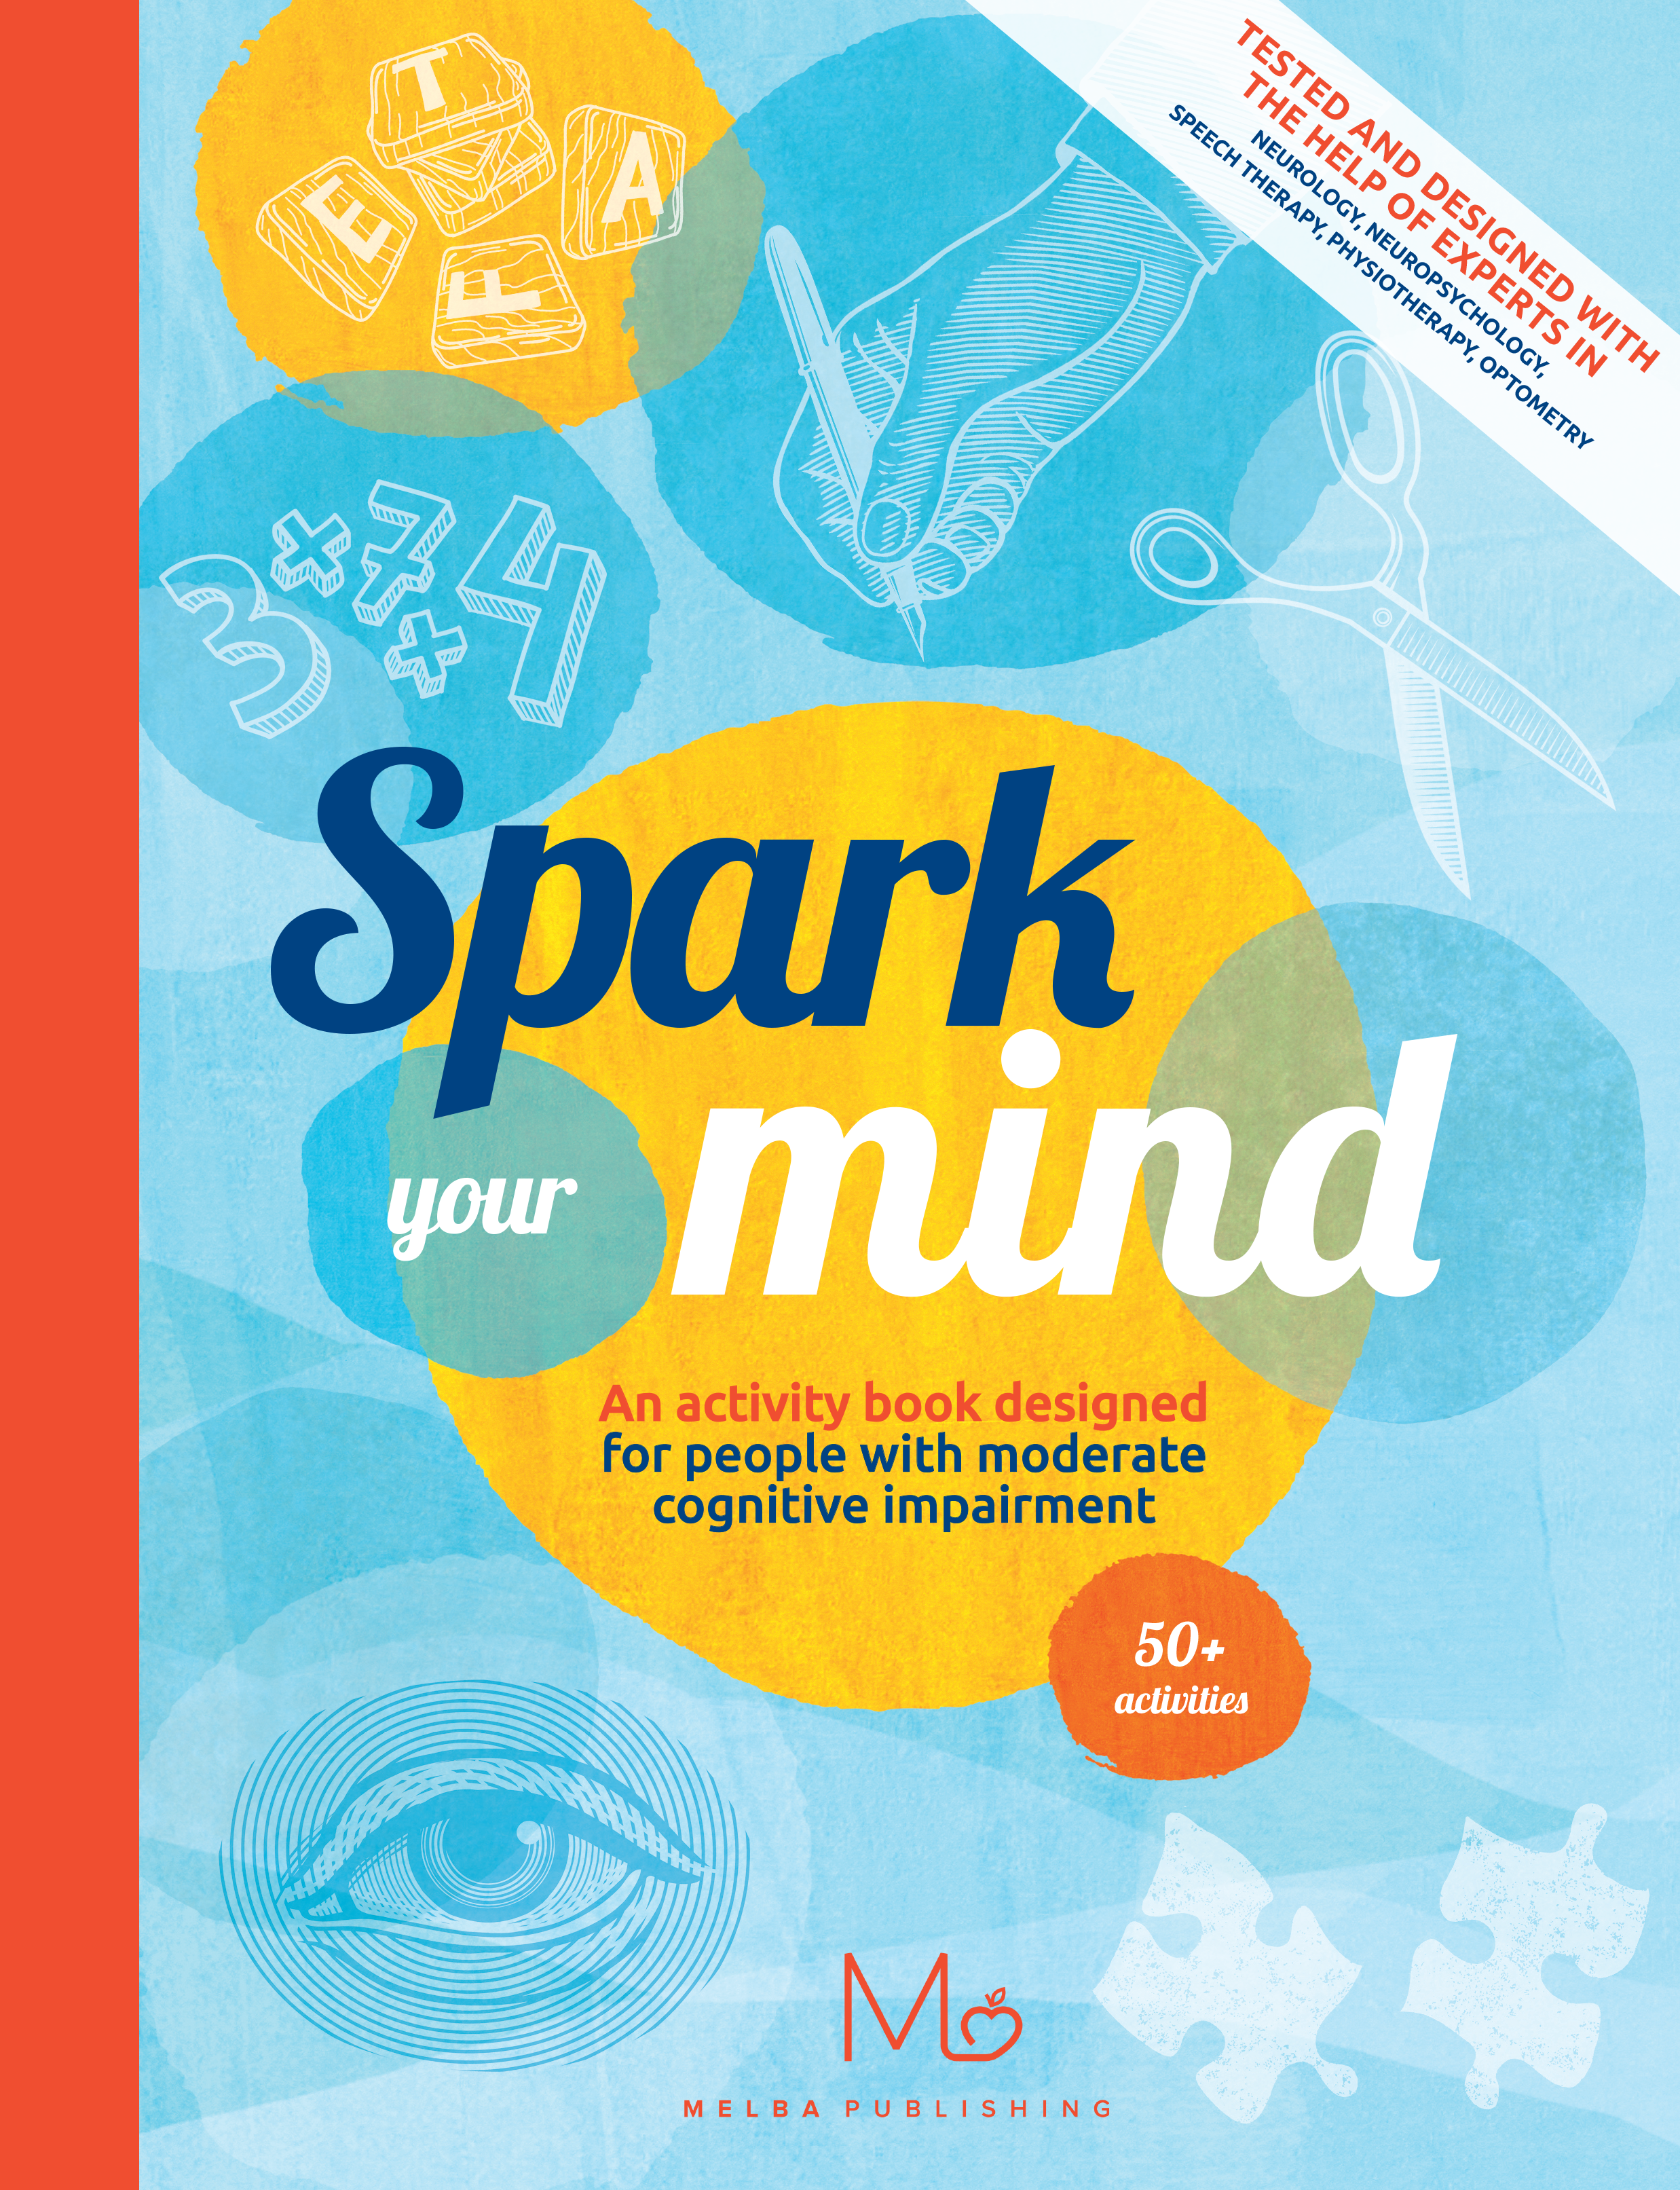 "Spark your mind" Book